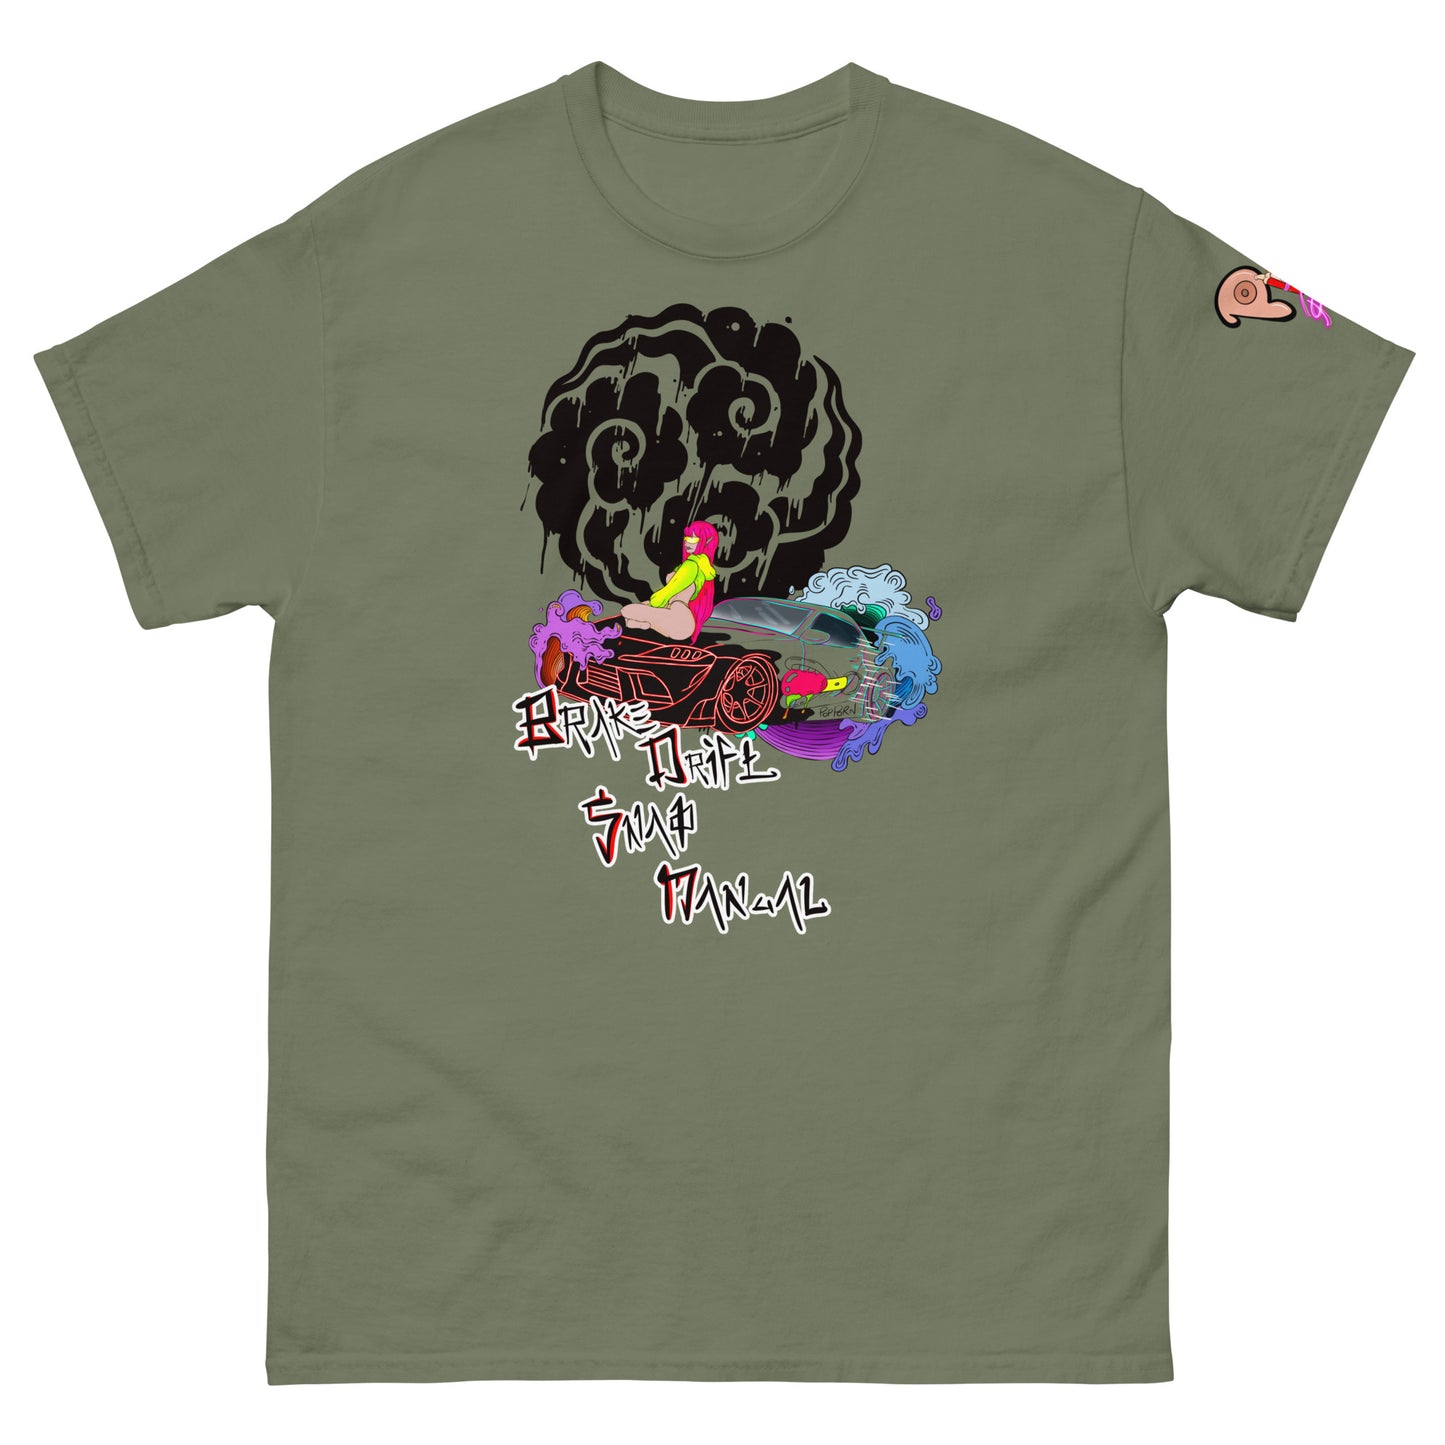 BDSM - T-Shirt UOMO